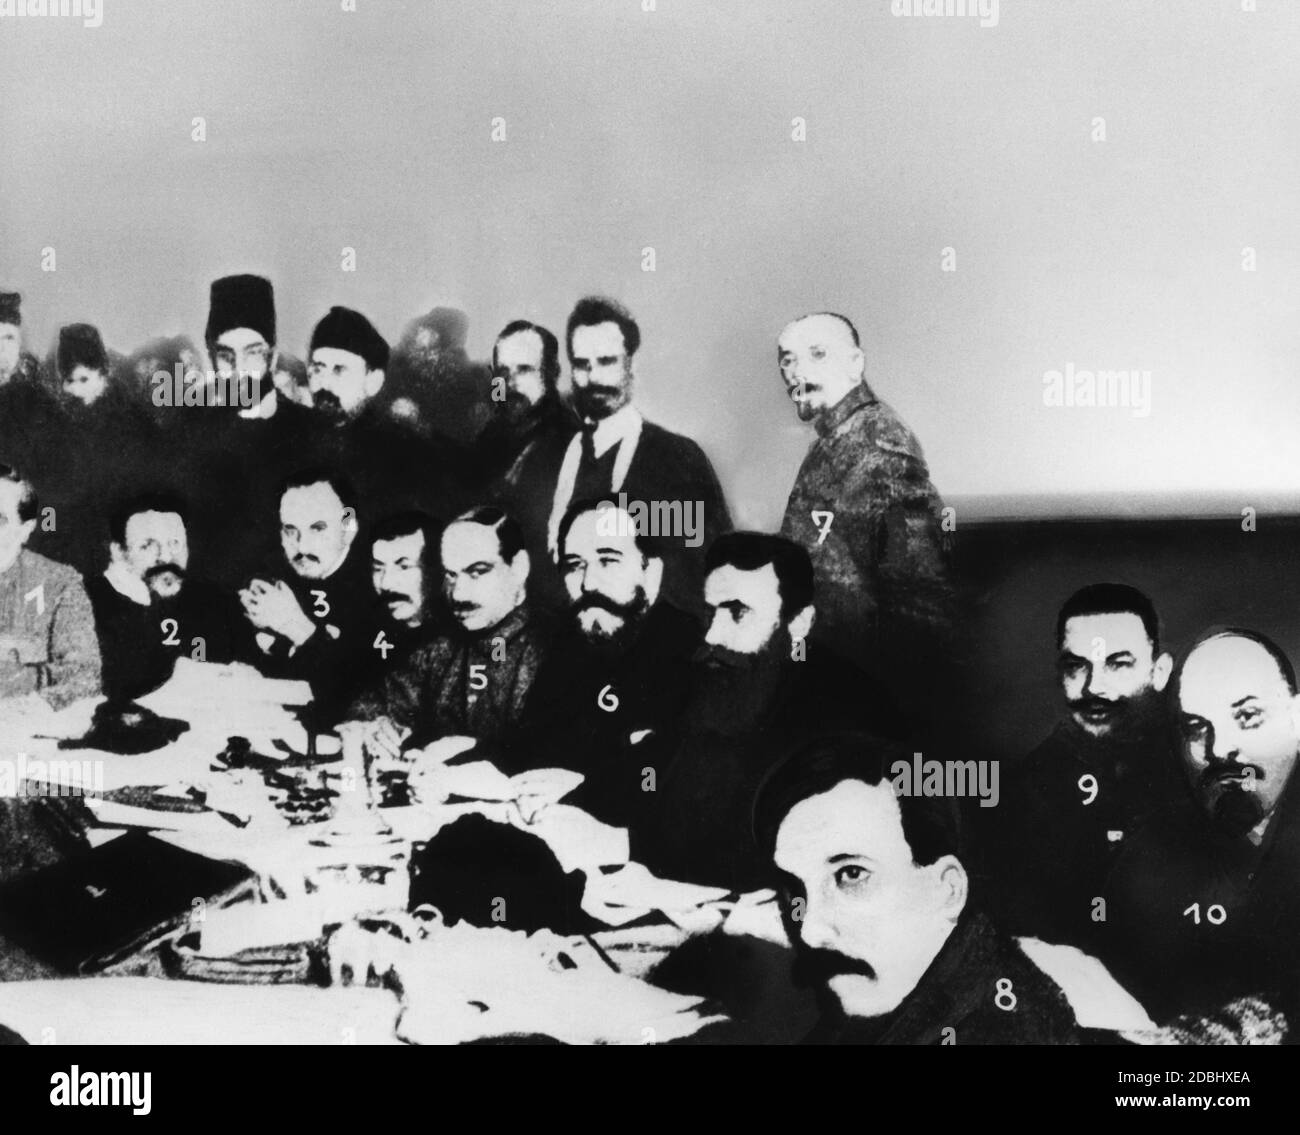 Da sinistra: 1. Vyshinsky, 2. Kalinin, 3. Bukharin, 4. Stalin, 5. Yagoda, 6. Kamenev, 7. Krestinsky, 8. Rykov, 9. Voroshilov, 10. Lenin. Dopo la vittoria di Stalin su Bukharin e Zinoviev dopo la morte di Lenin, Bukharin, Yagoda, Kamenev, Krestinsky e Rykov caddero vittima del dispotismo durante il terrore stalinista. Foto Stock